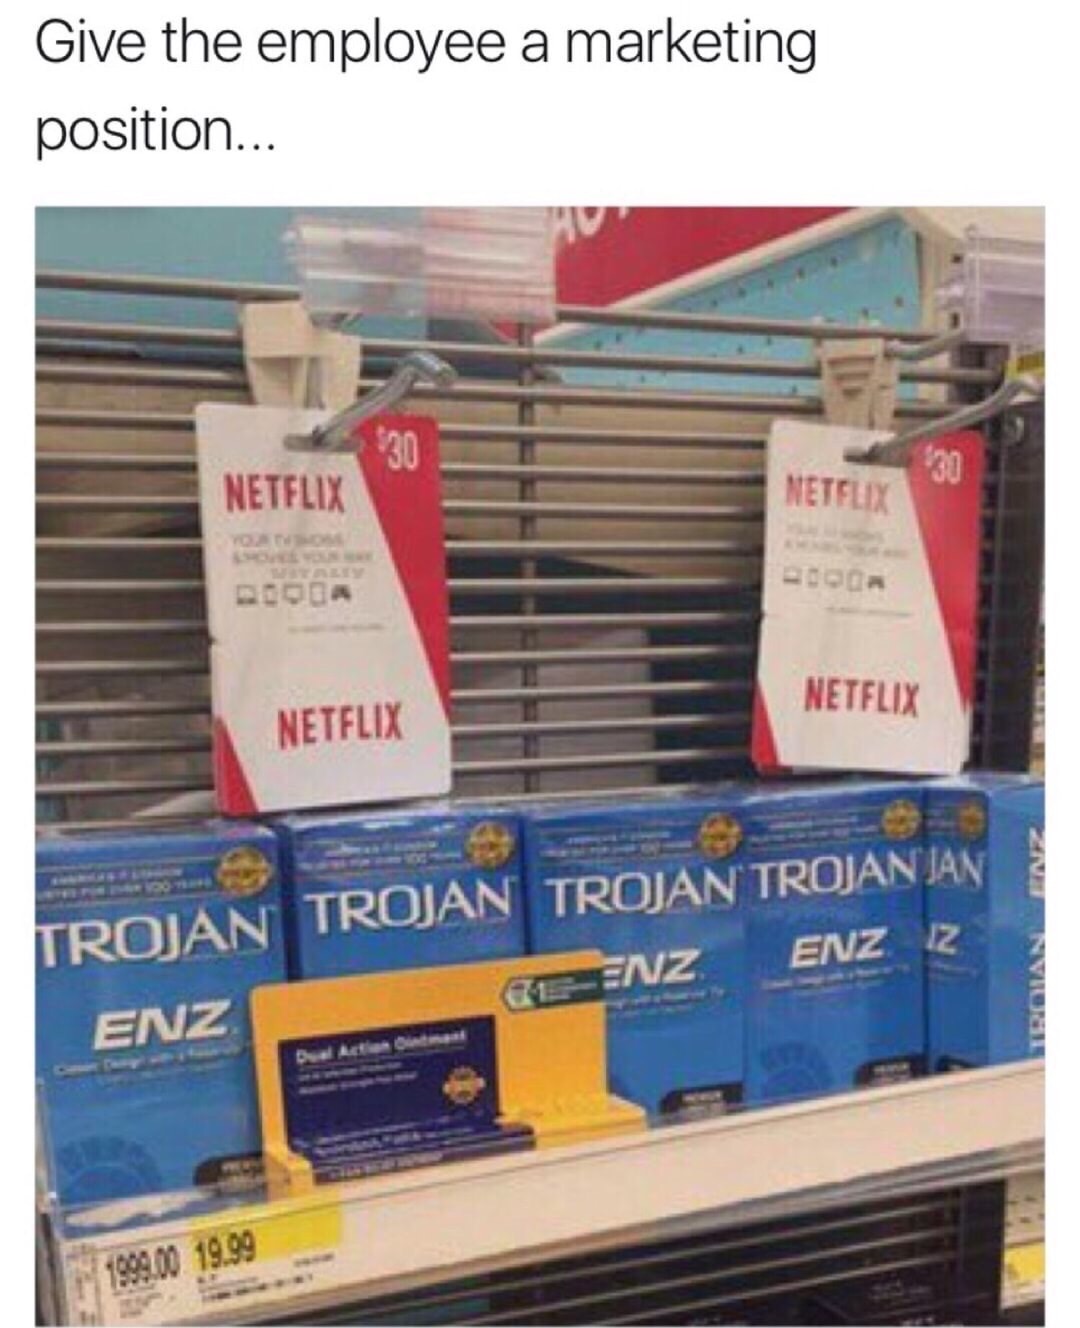 memes - Give the employee a marketing position... Netflix Netflix Booga Netflix Netflix Trojan Trojan Trojan Trojan Jan Enz Eenzenz Iz Ni 699.00 19.99